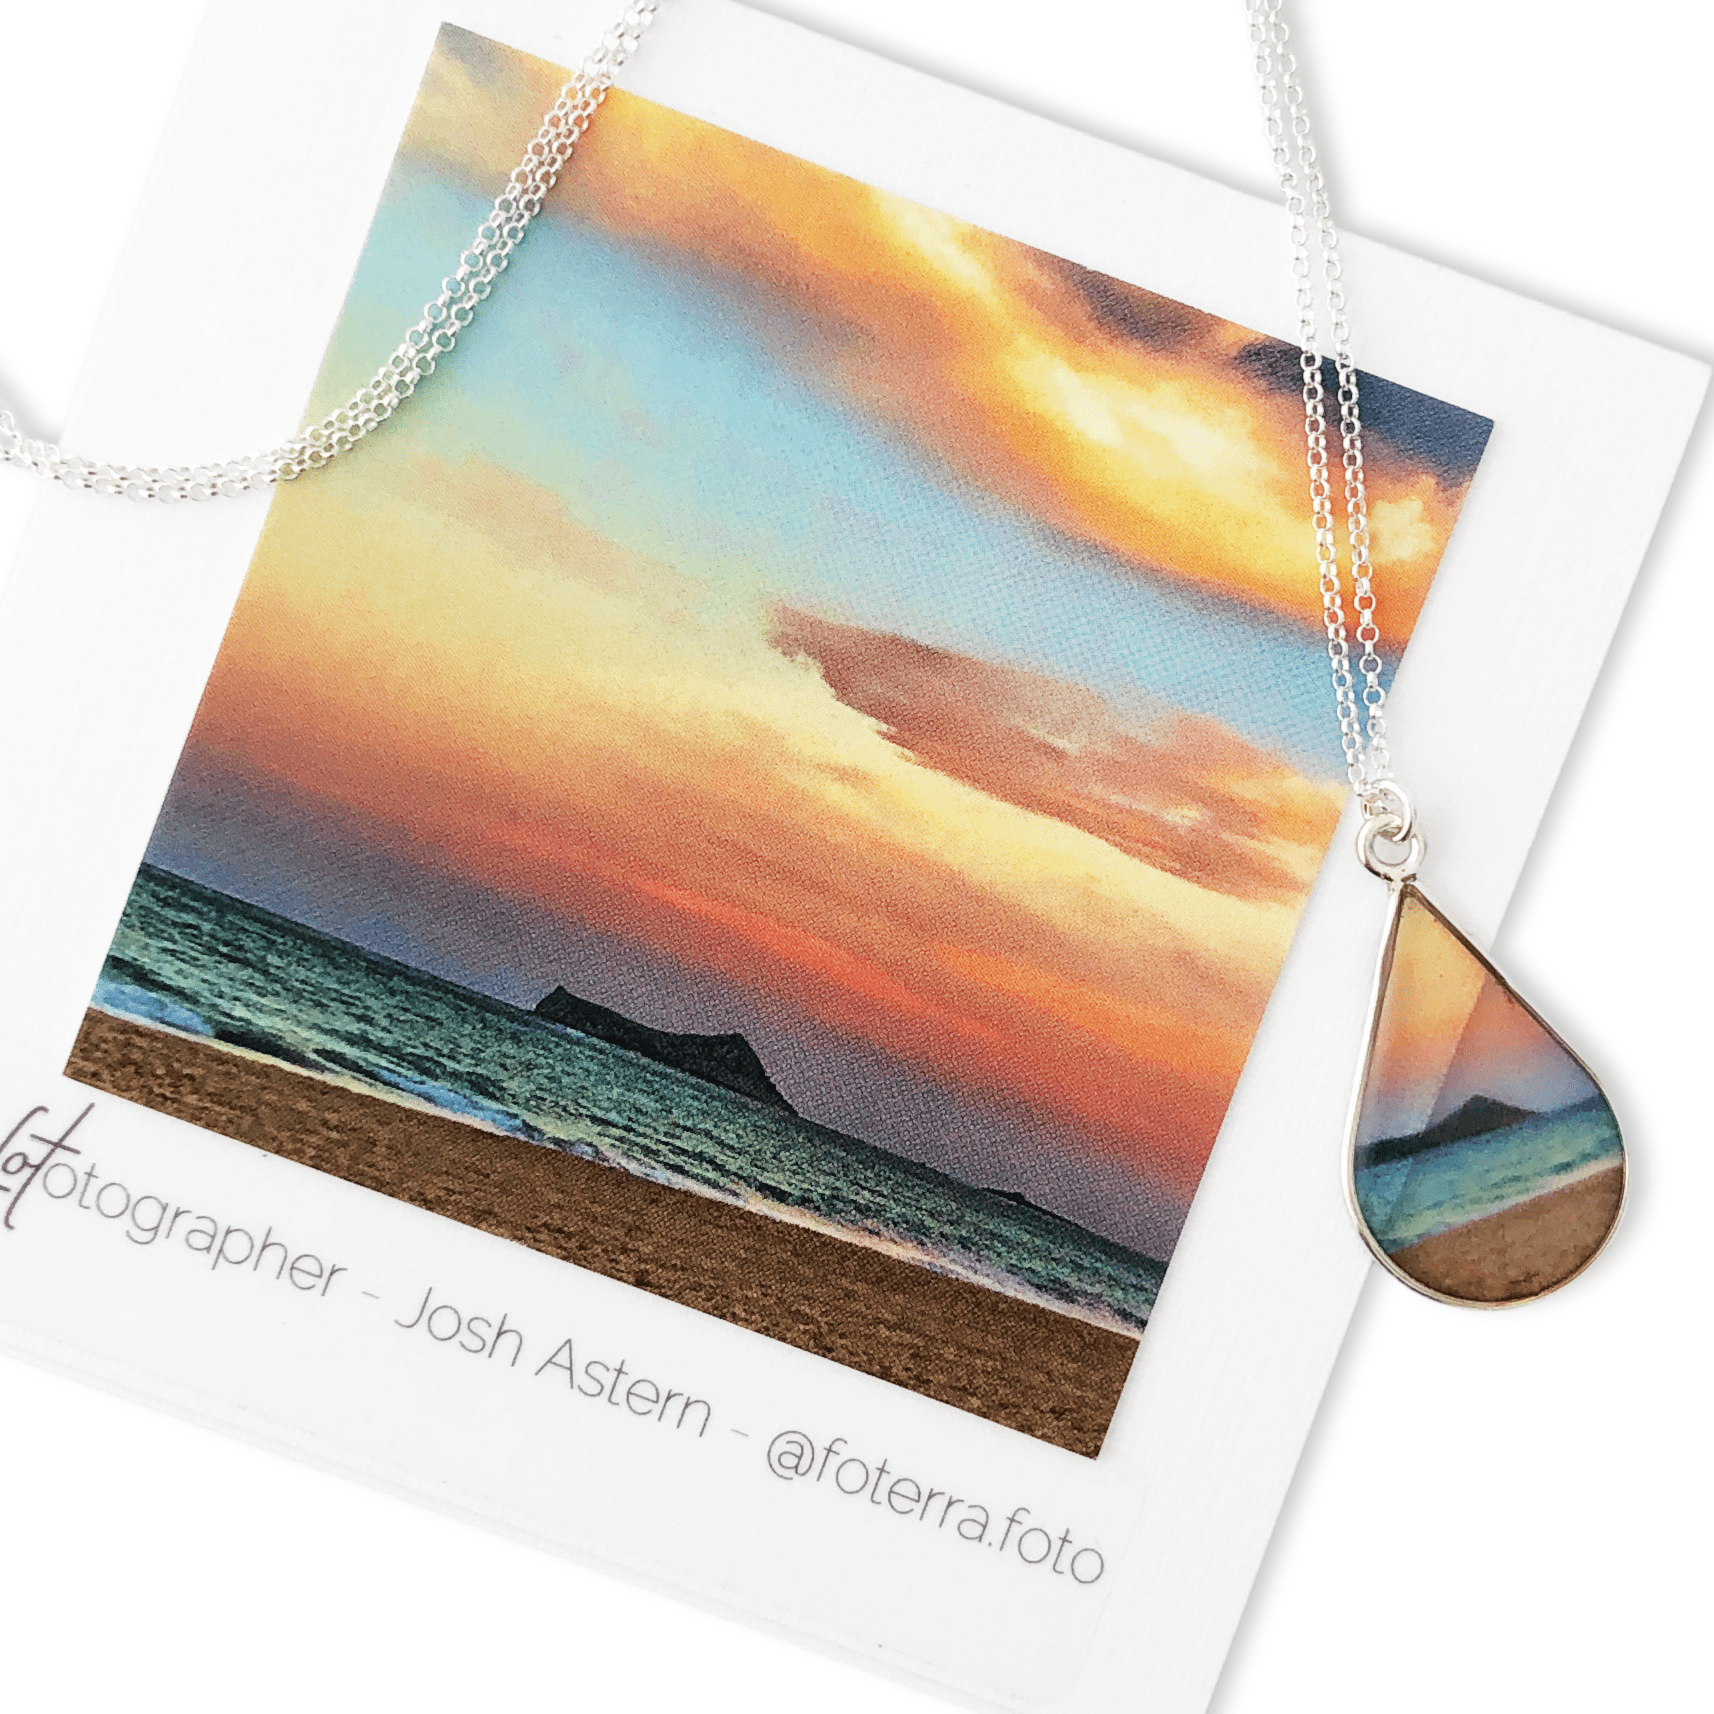 Hawaiian Sunset Necklace featuring rabbit island oahu